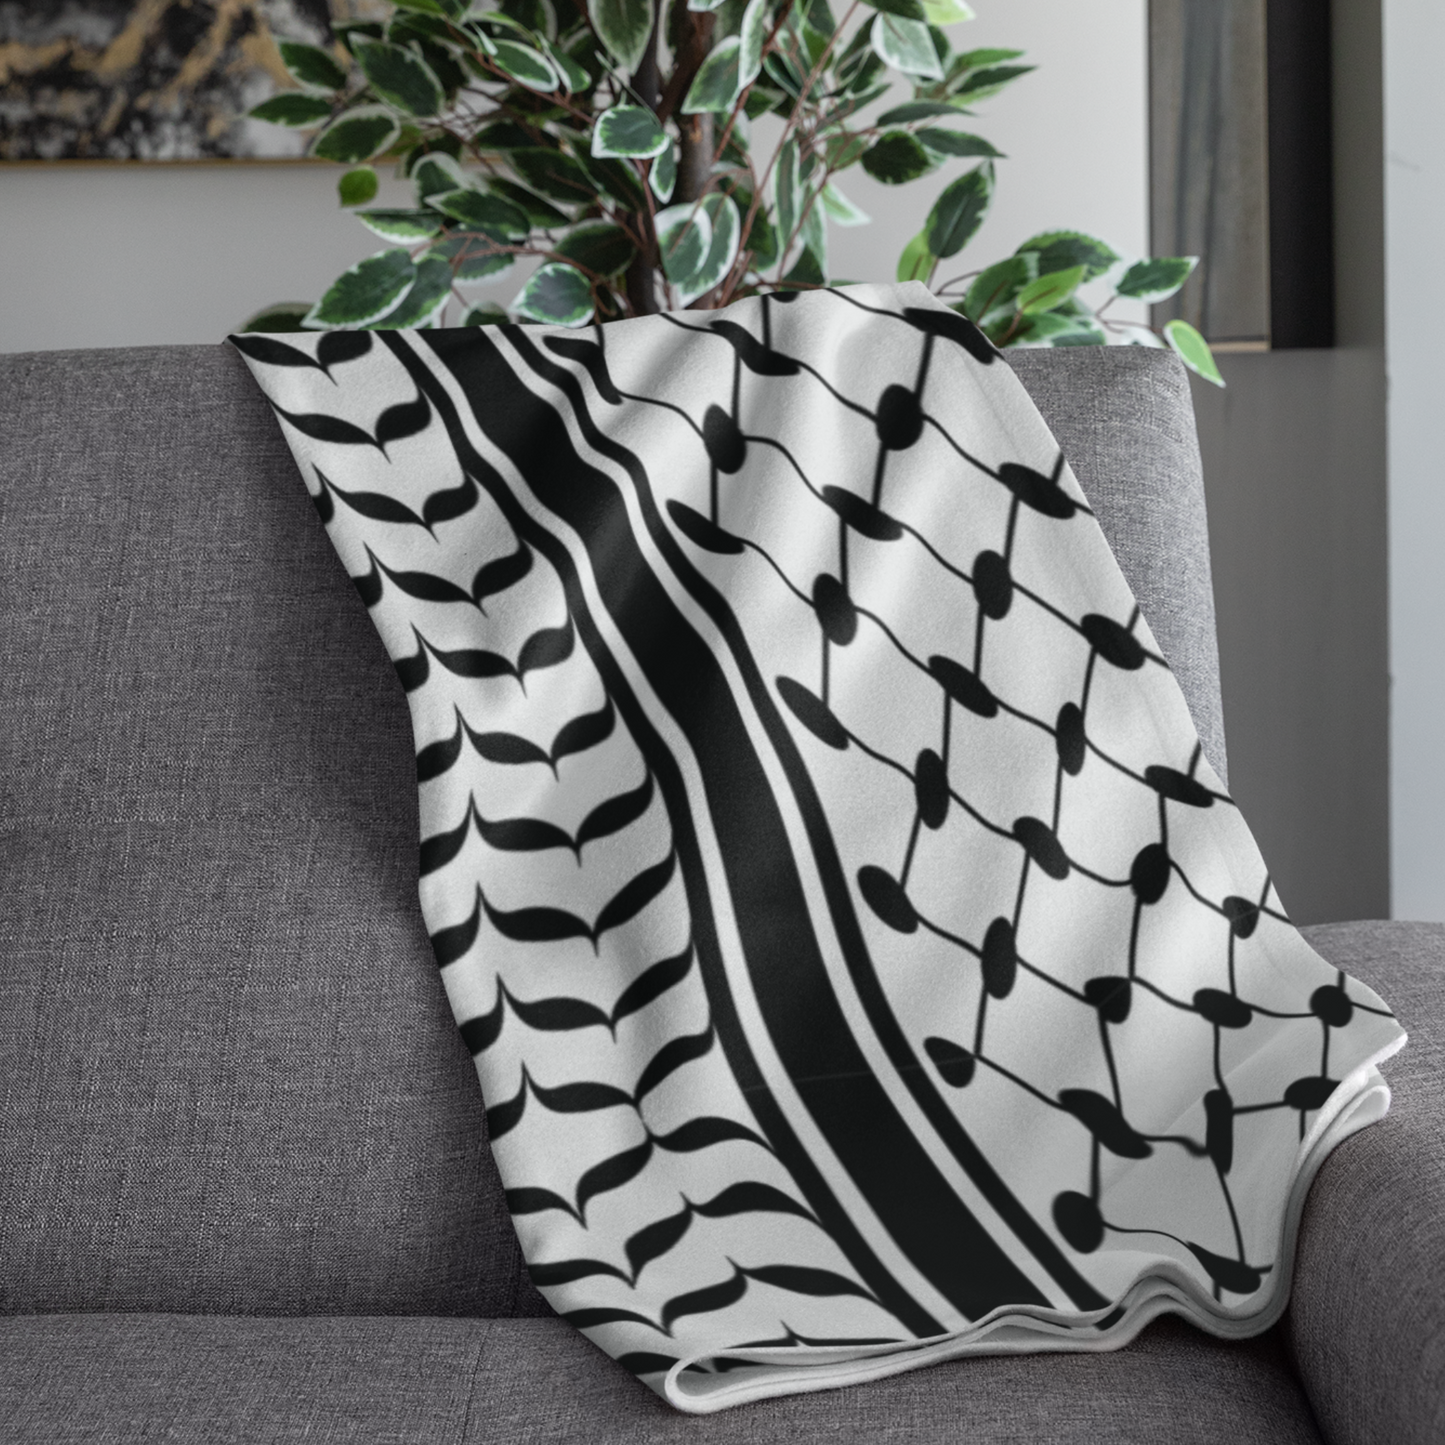 Keffiyeh Palestinian Blanket 60x80 inches